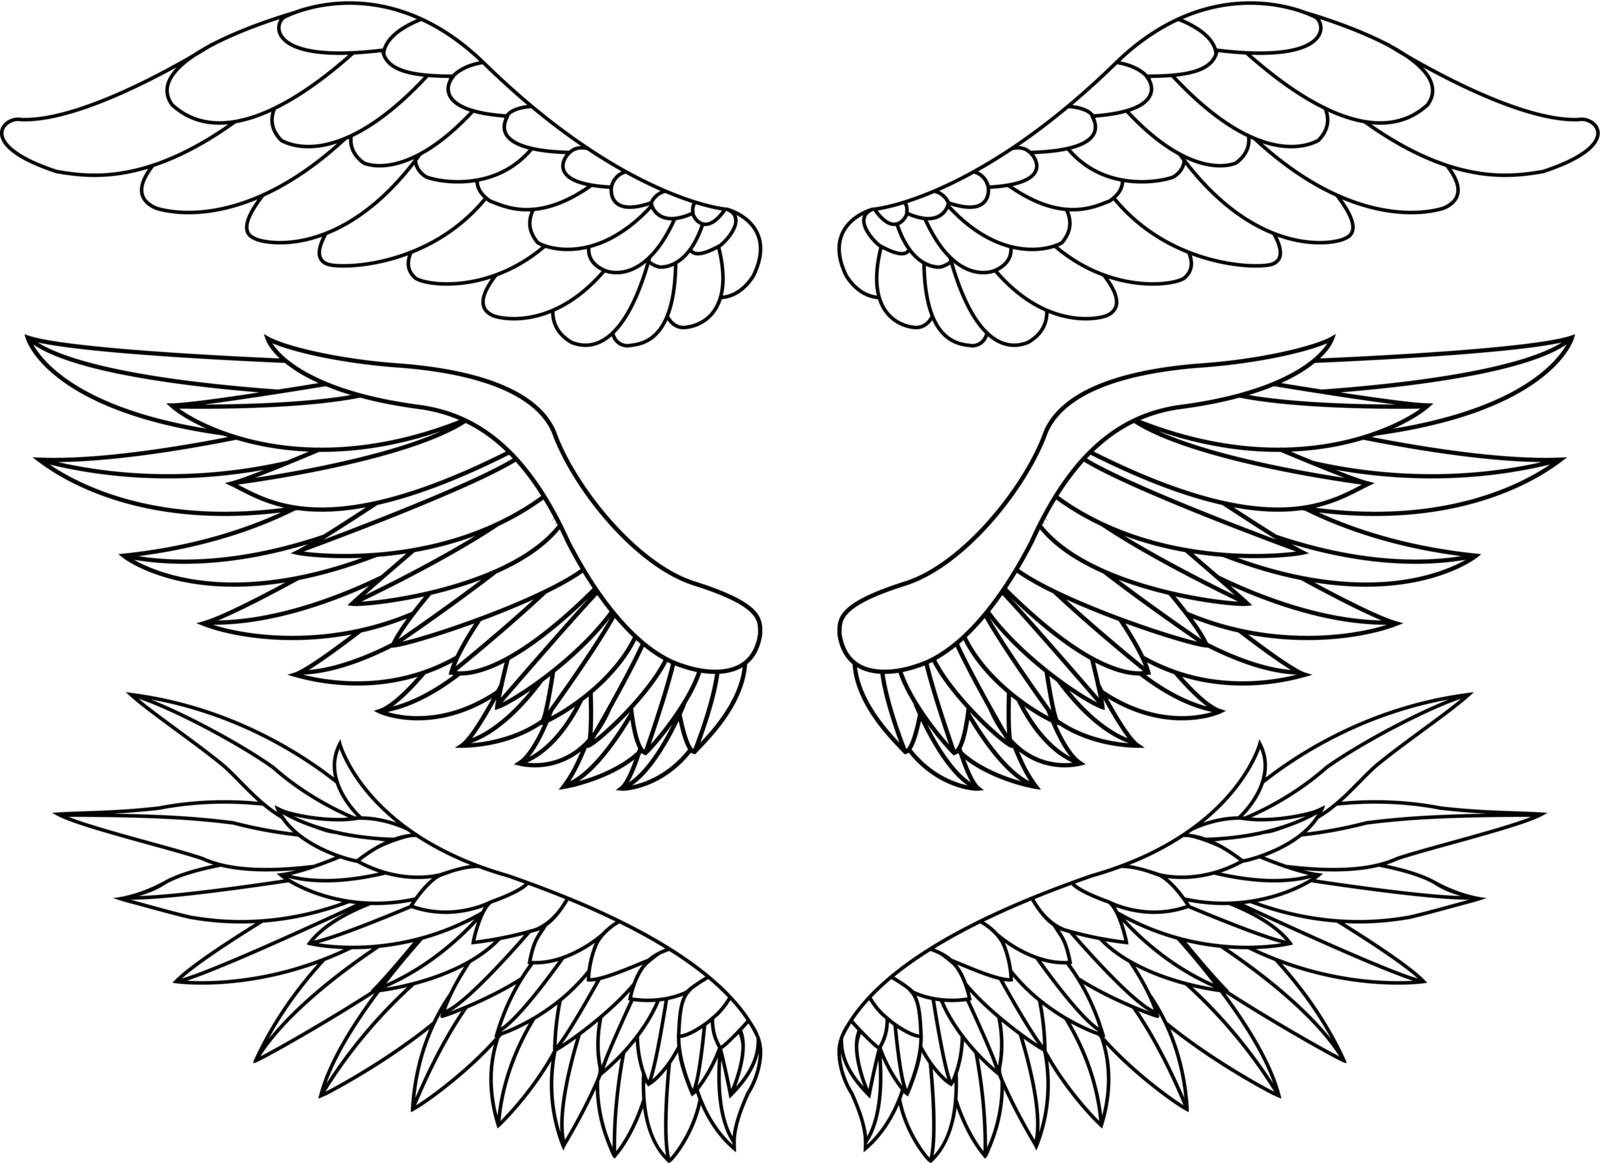 Wings by Matamu